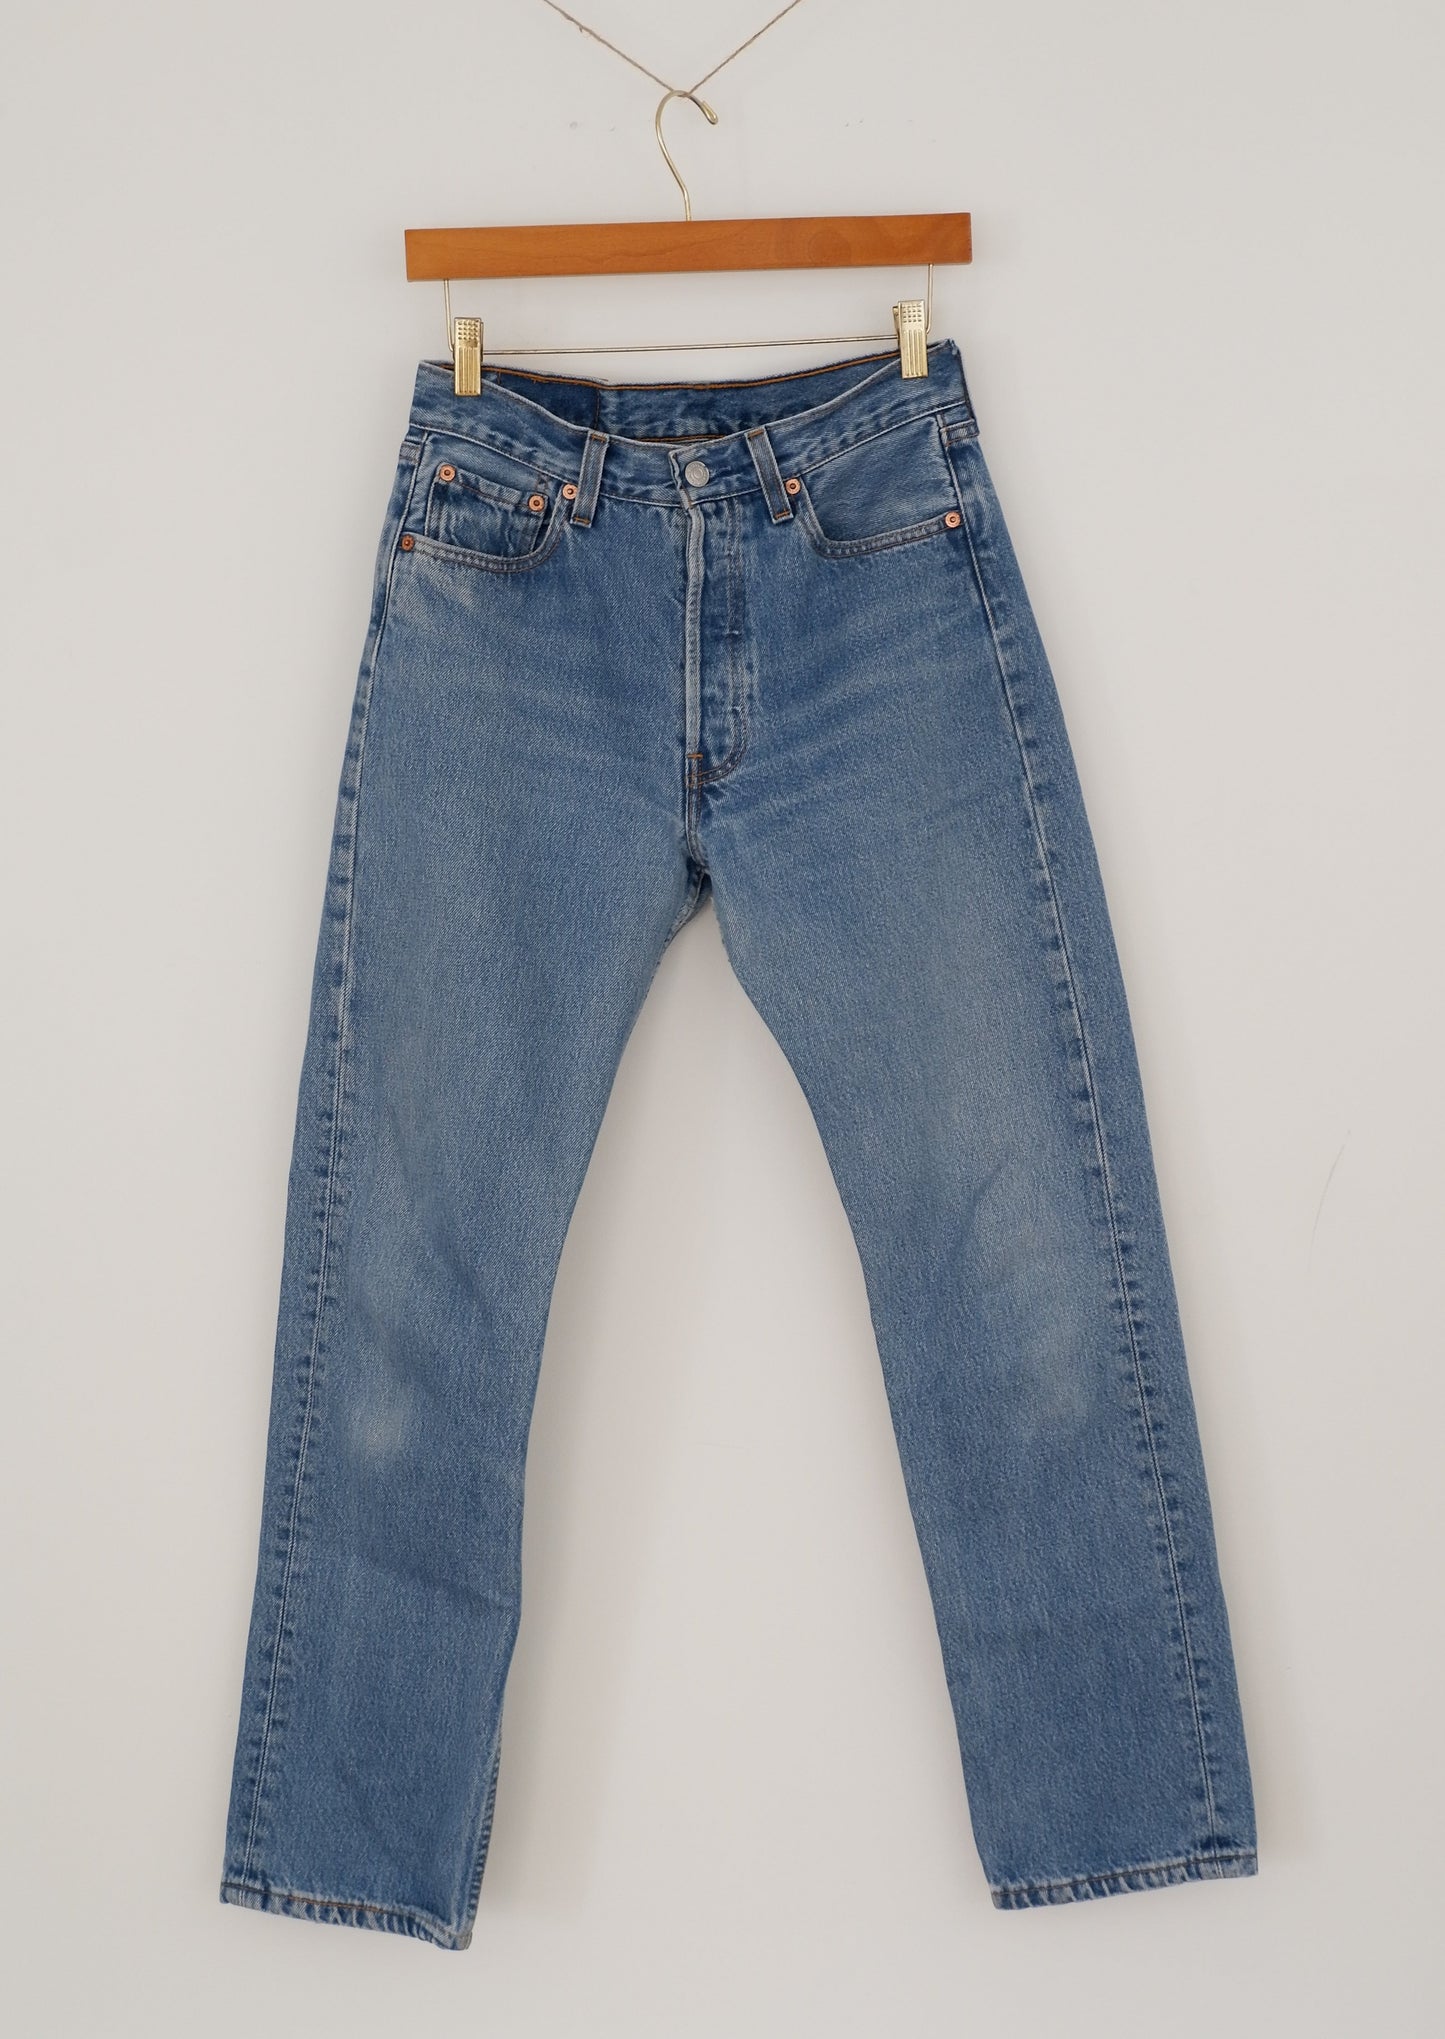 Levis Vintage 501 Medium Wash Jeans - 28